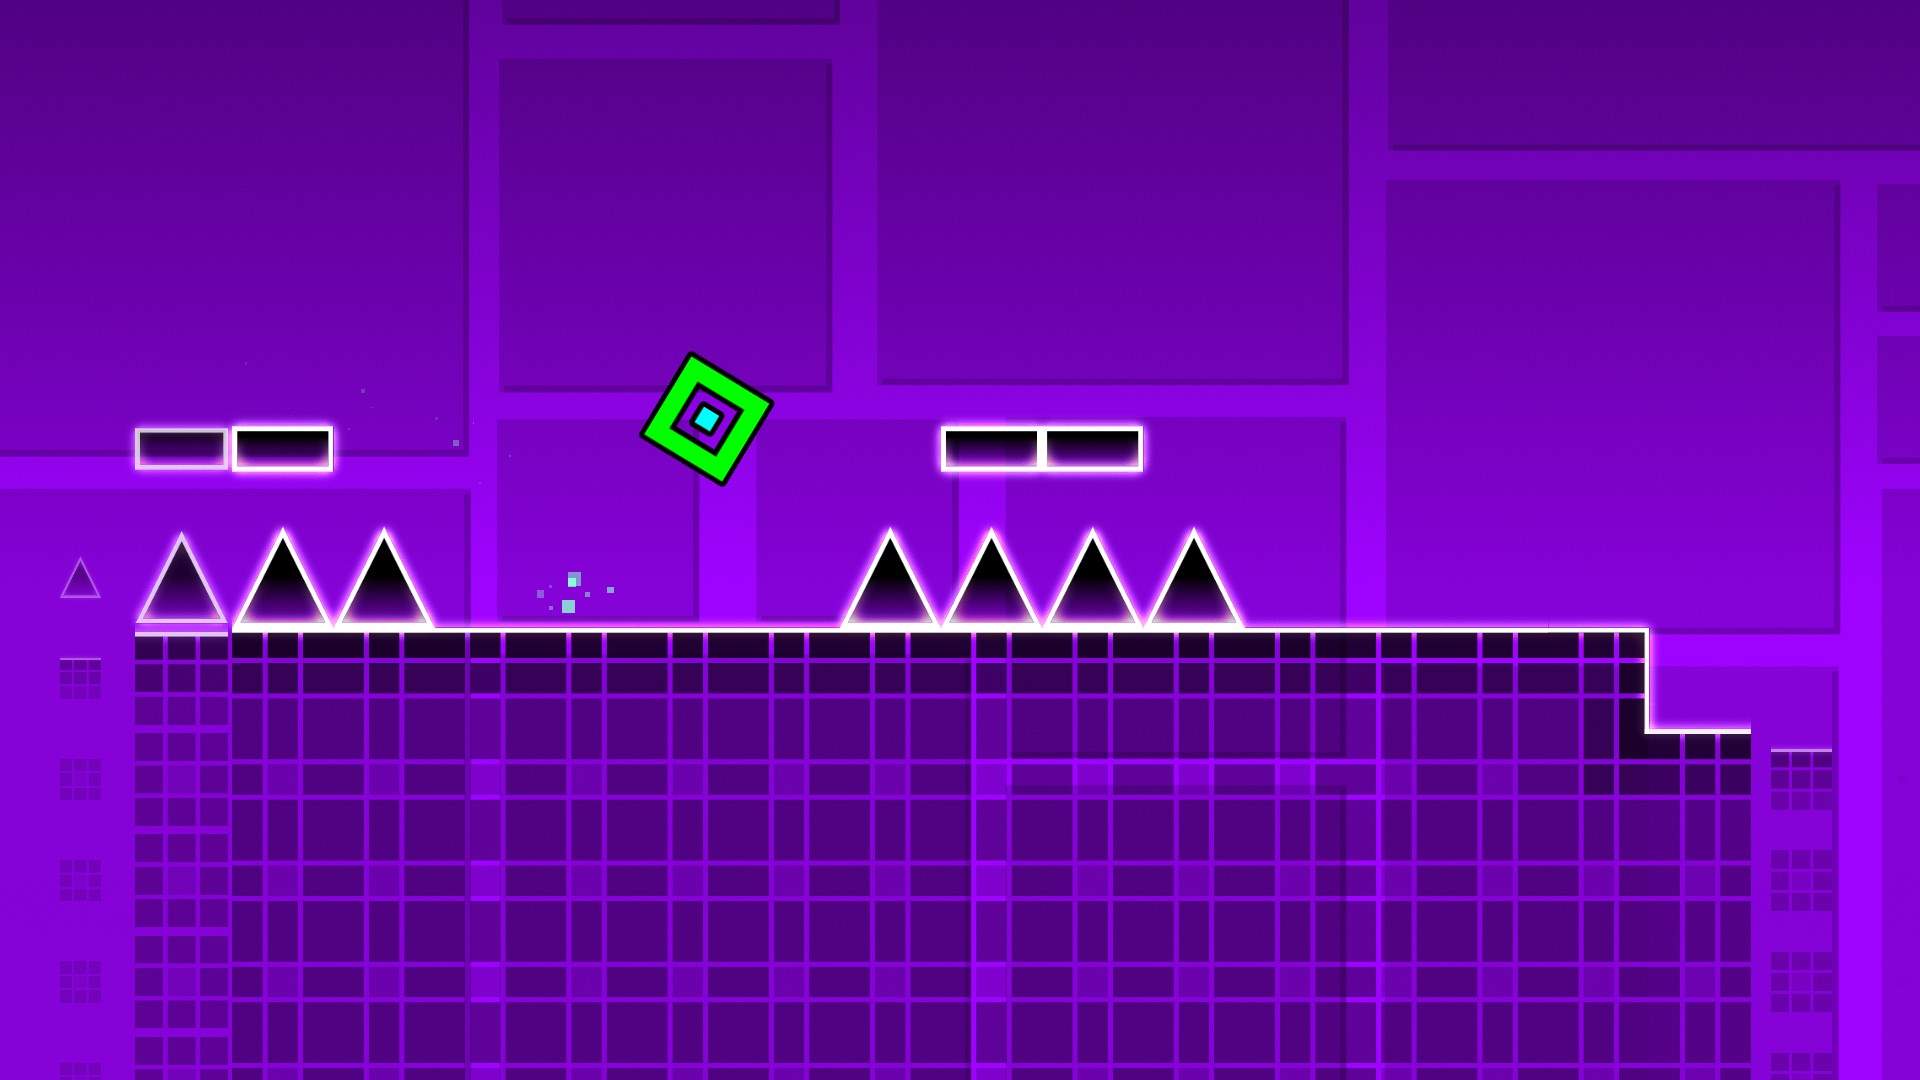 Block Dash: Jump Geometry Lite APK (Android Game) - Free Download